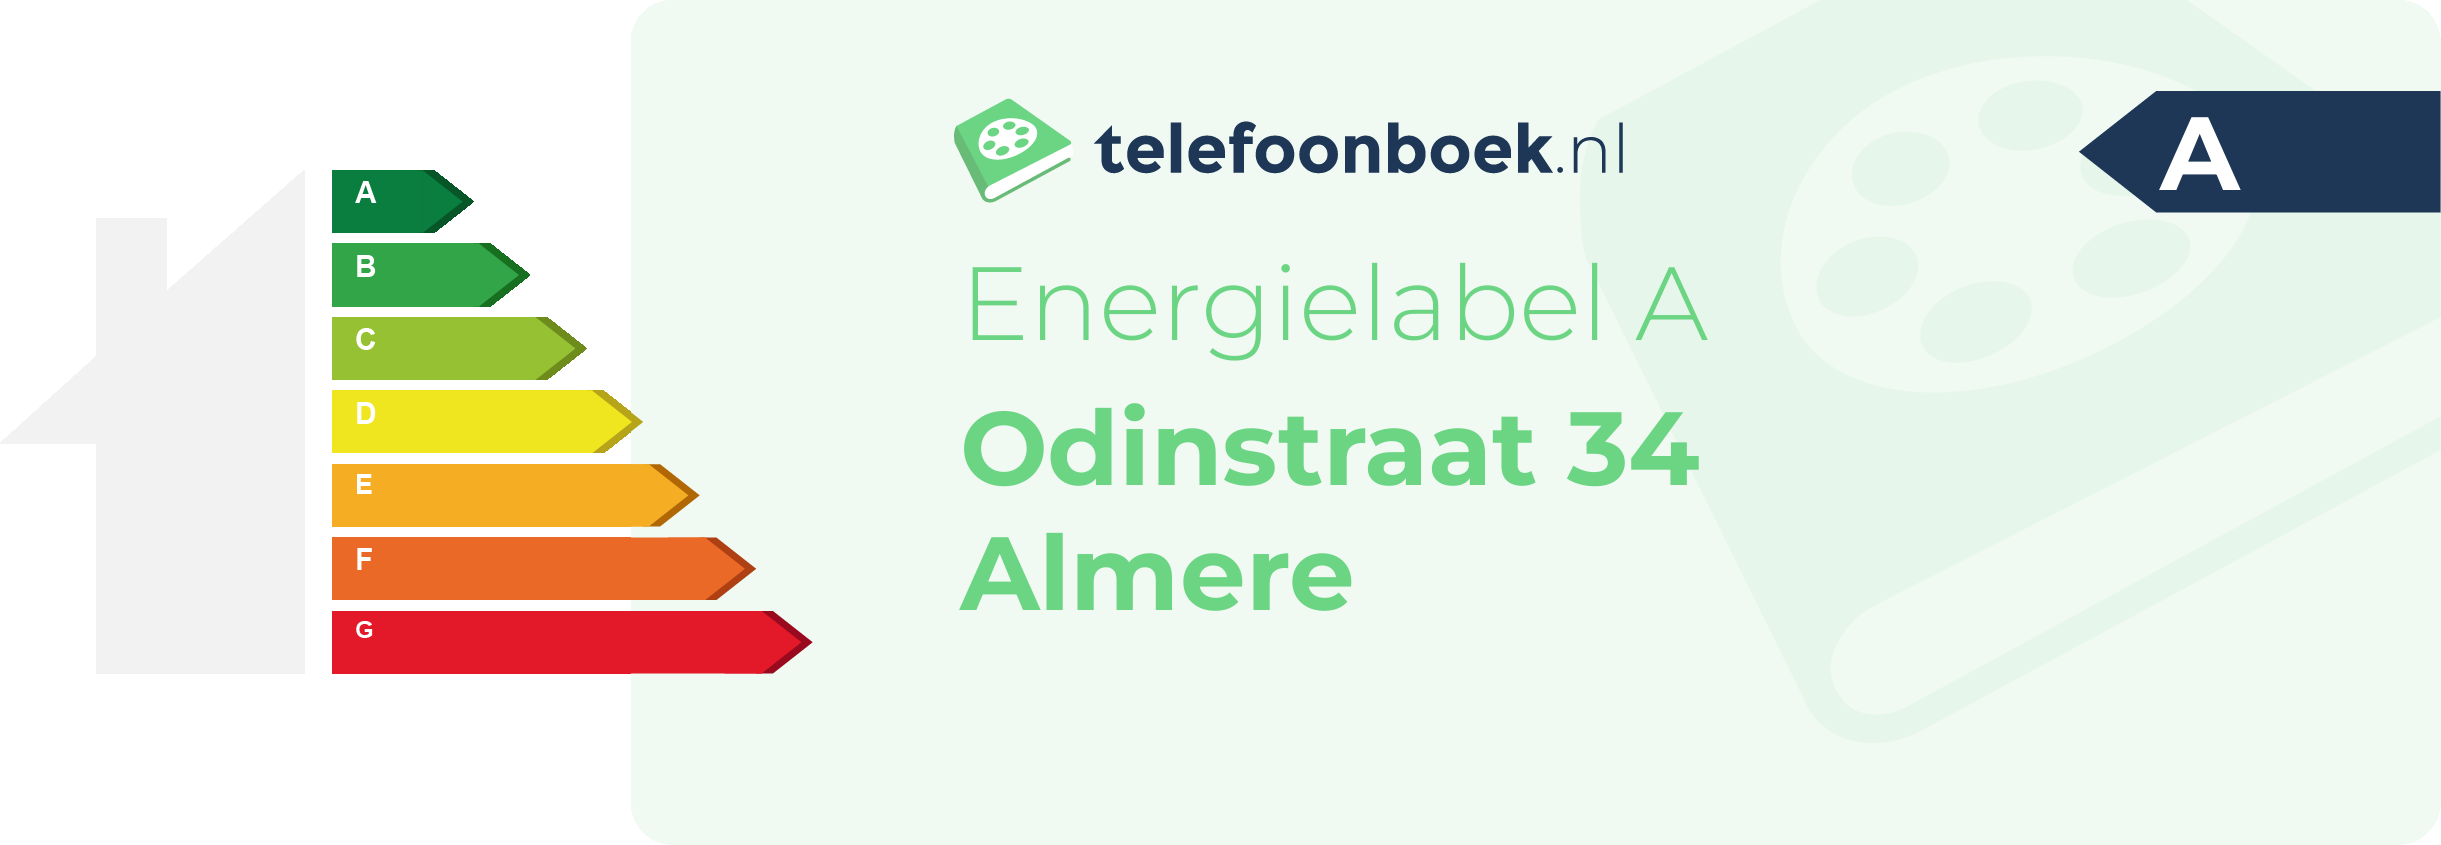 Energielabel Odinstraat 34 Almere